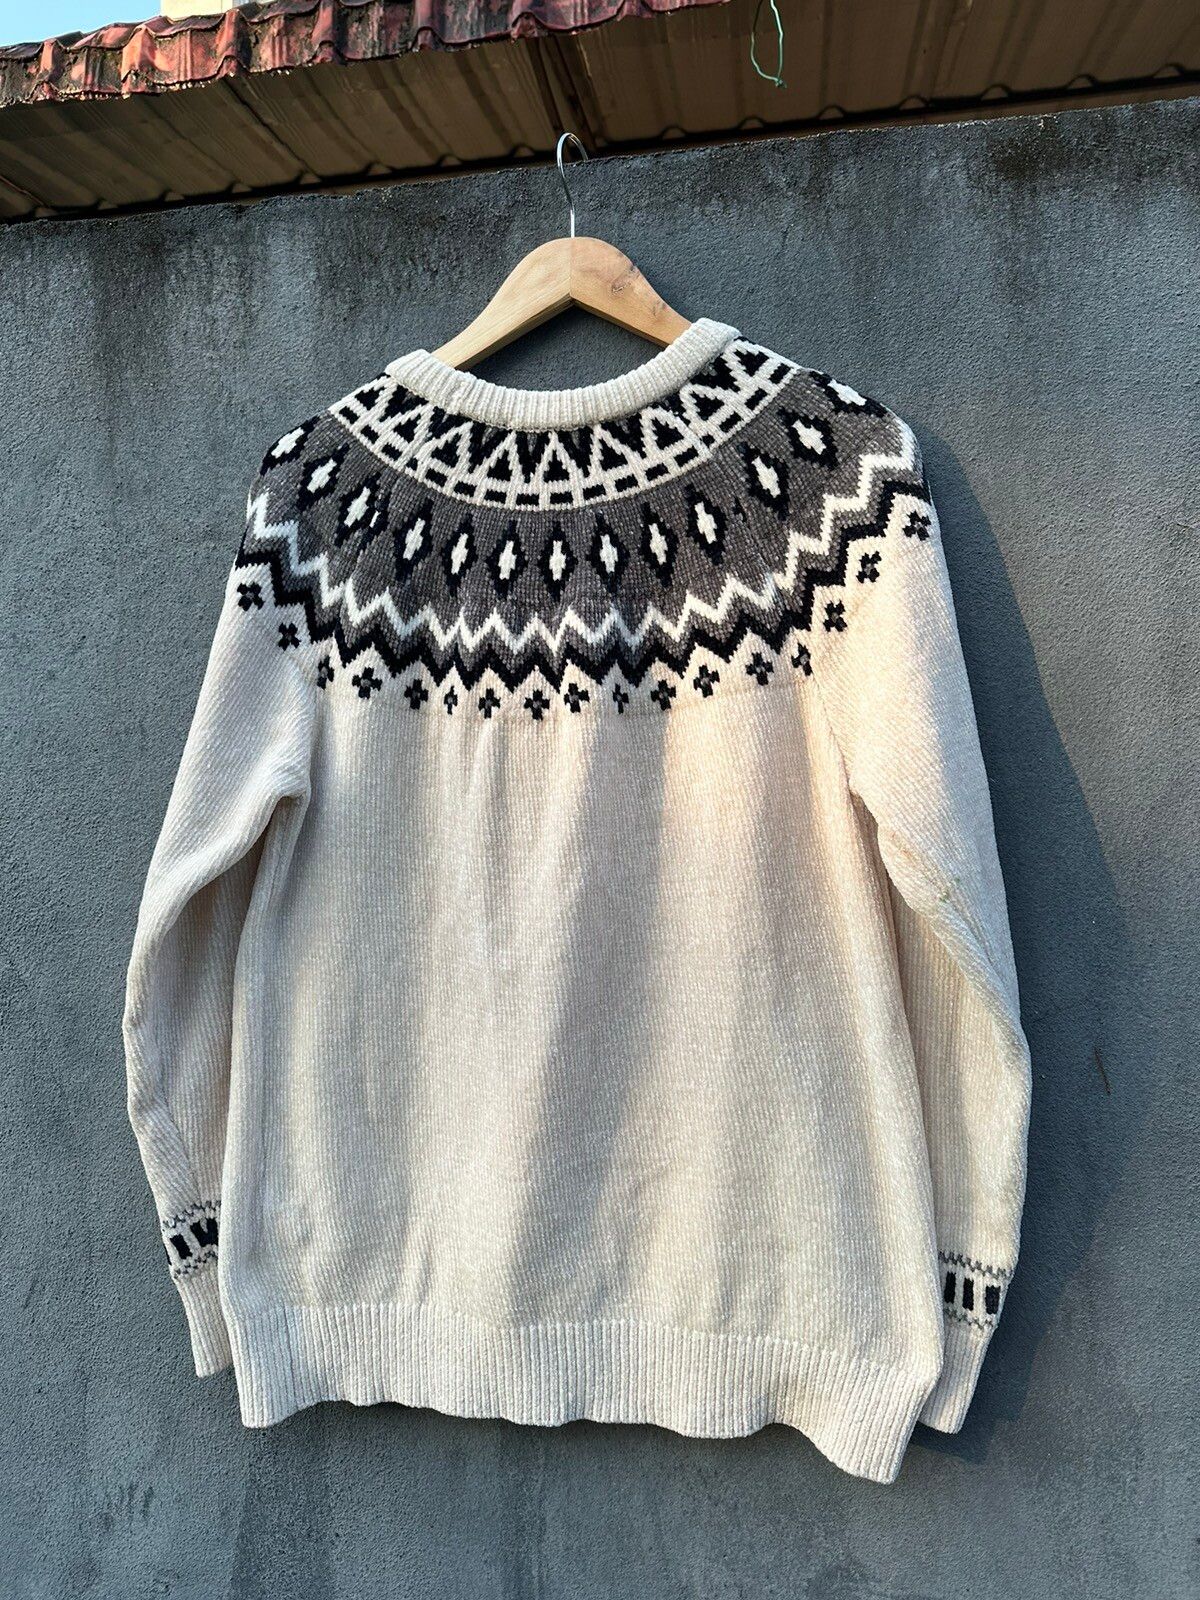 Japanese Brand Ikka Knitted Sweatshirt Size US M / EU 48-50 / 2 - 7 Thumbnail